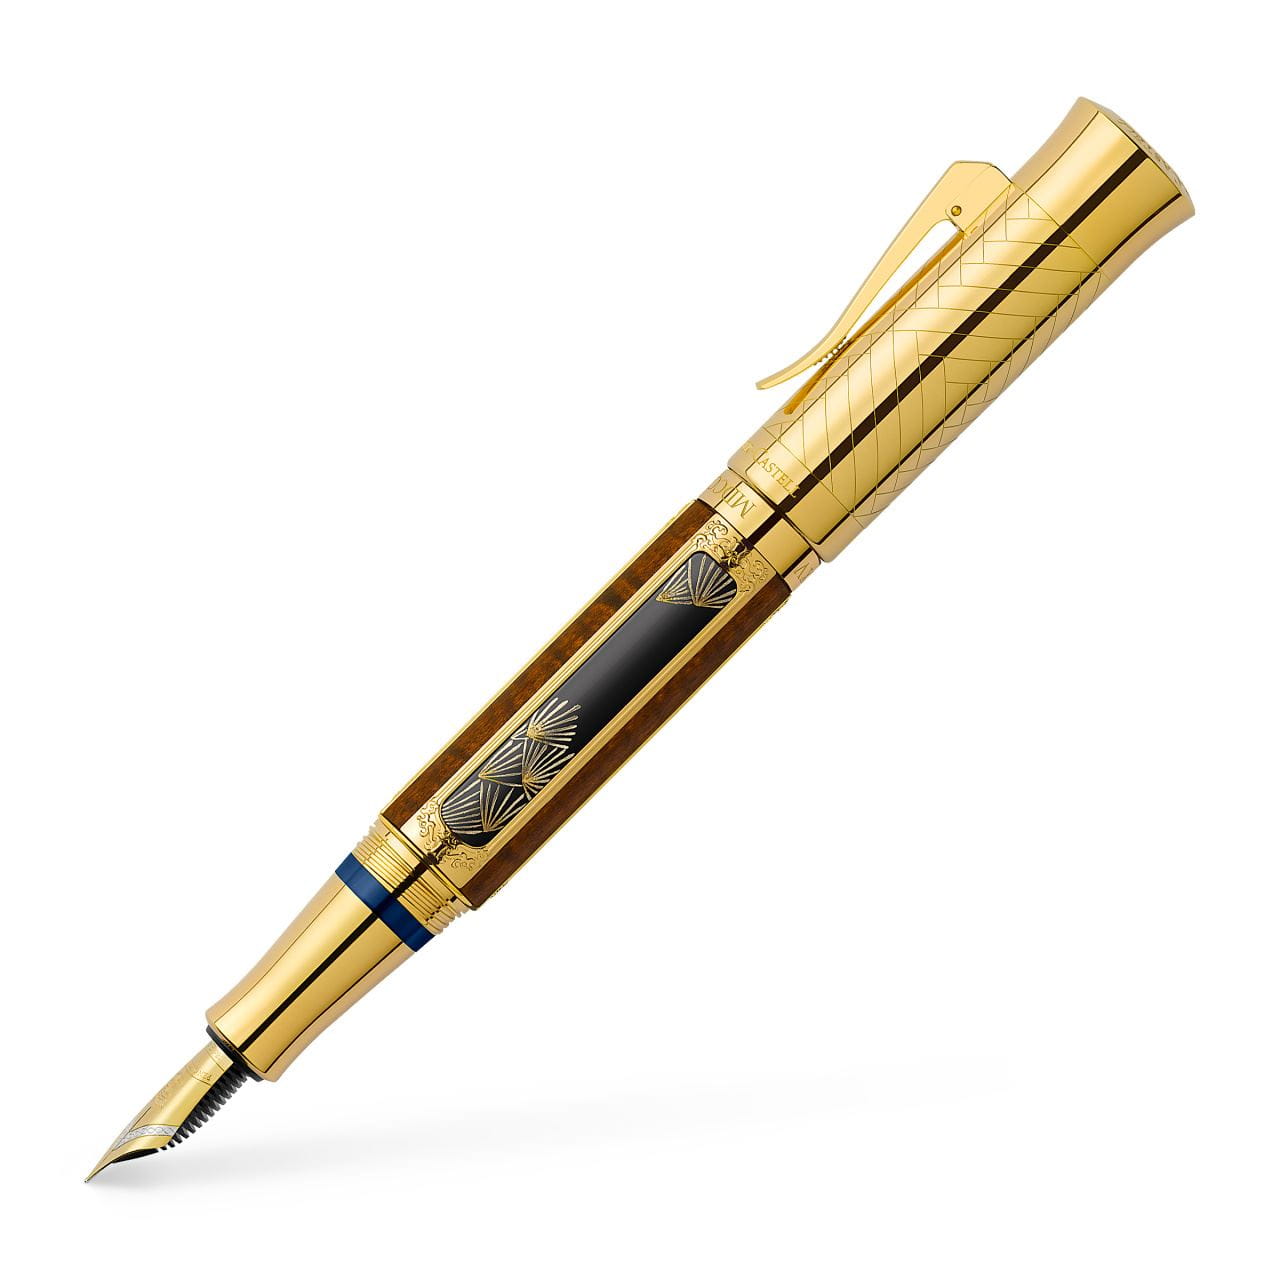 Graf-von-Faber-Castell - Fountain pen Pen of the Year 2016 SLE, Medium